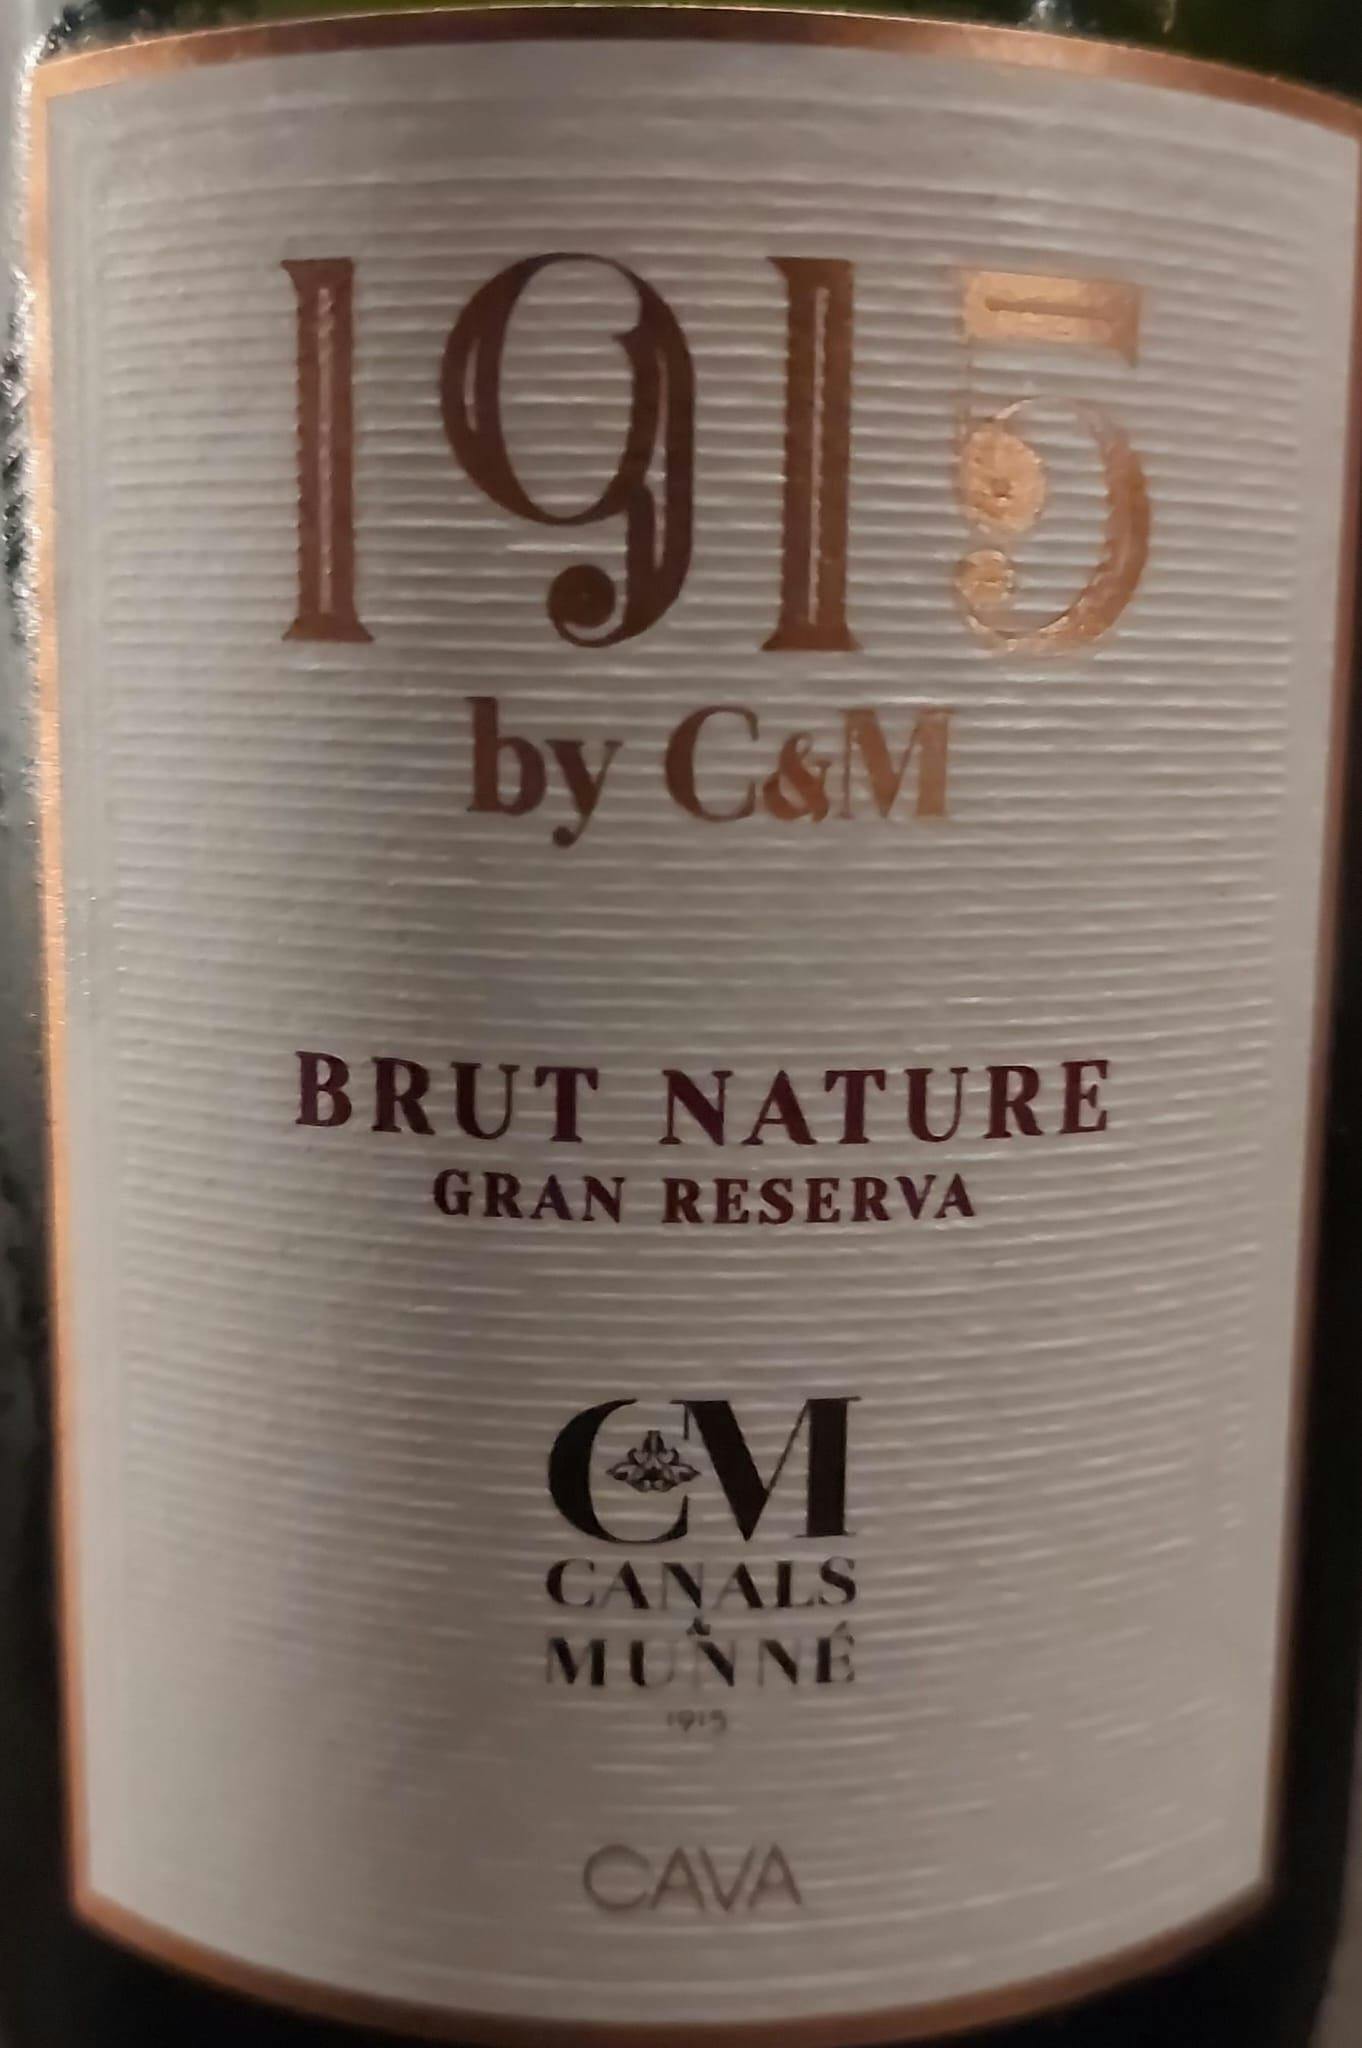 1915 by C&M Brut Nature Gran Reserva 2018 | Canals & Munné